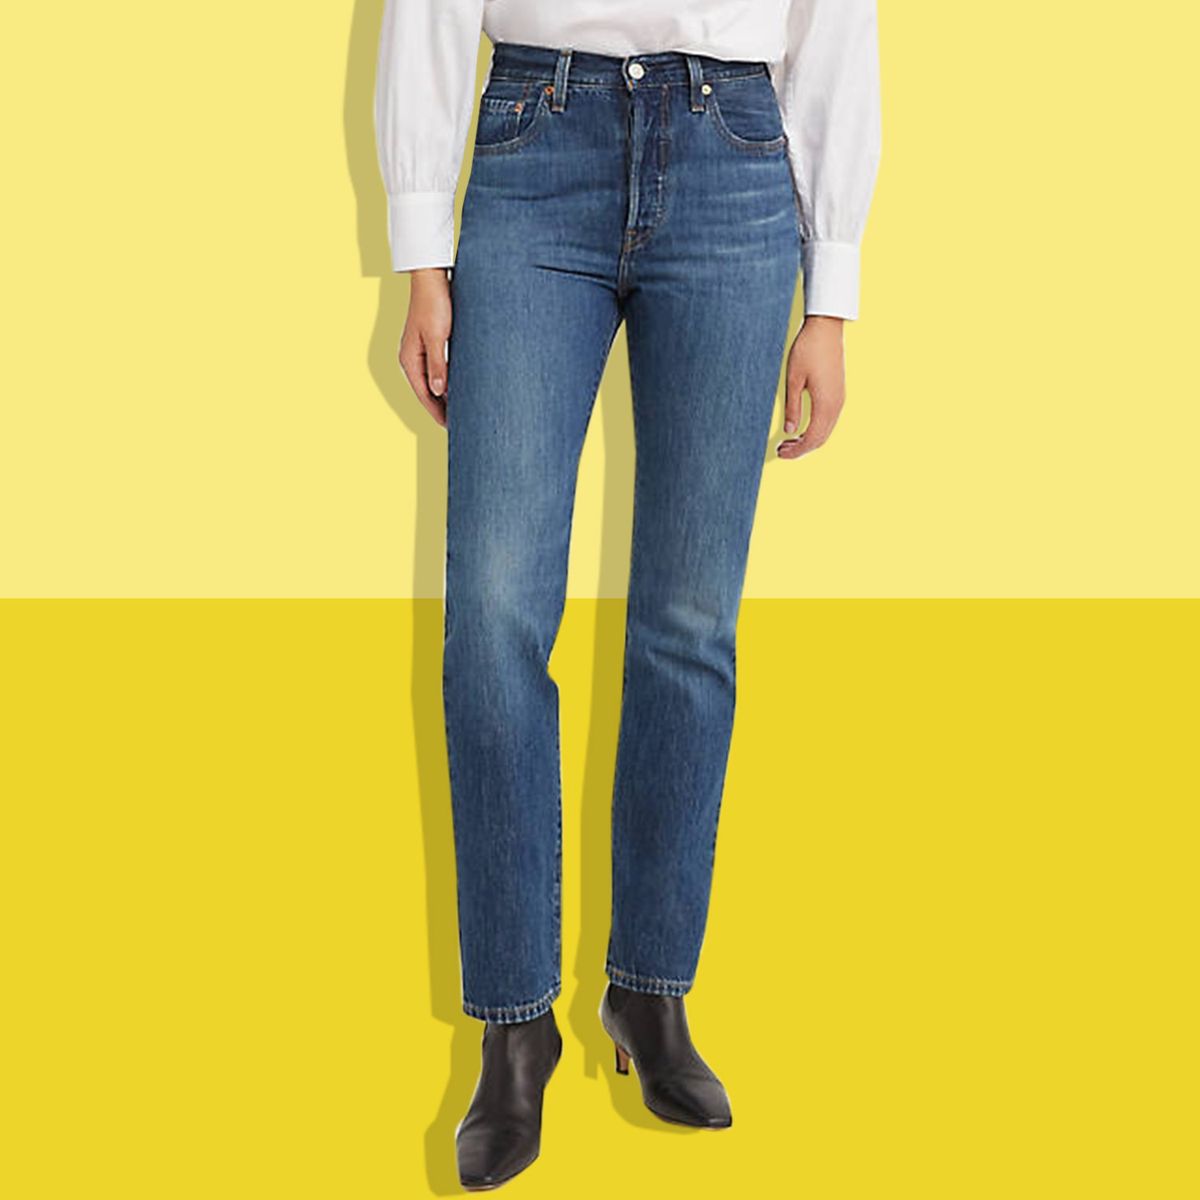 implicitte teori evne Levi's 501 Original Fit Jeans Sale 2021 | The Strategist